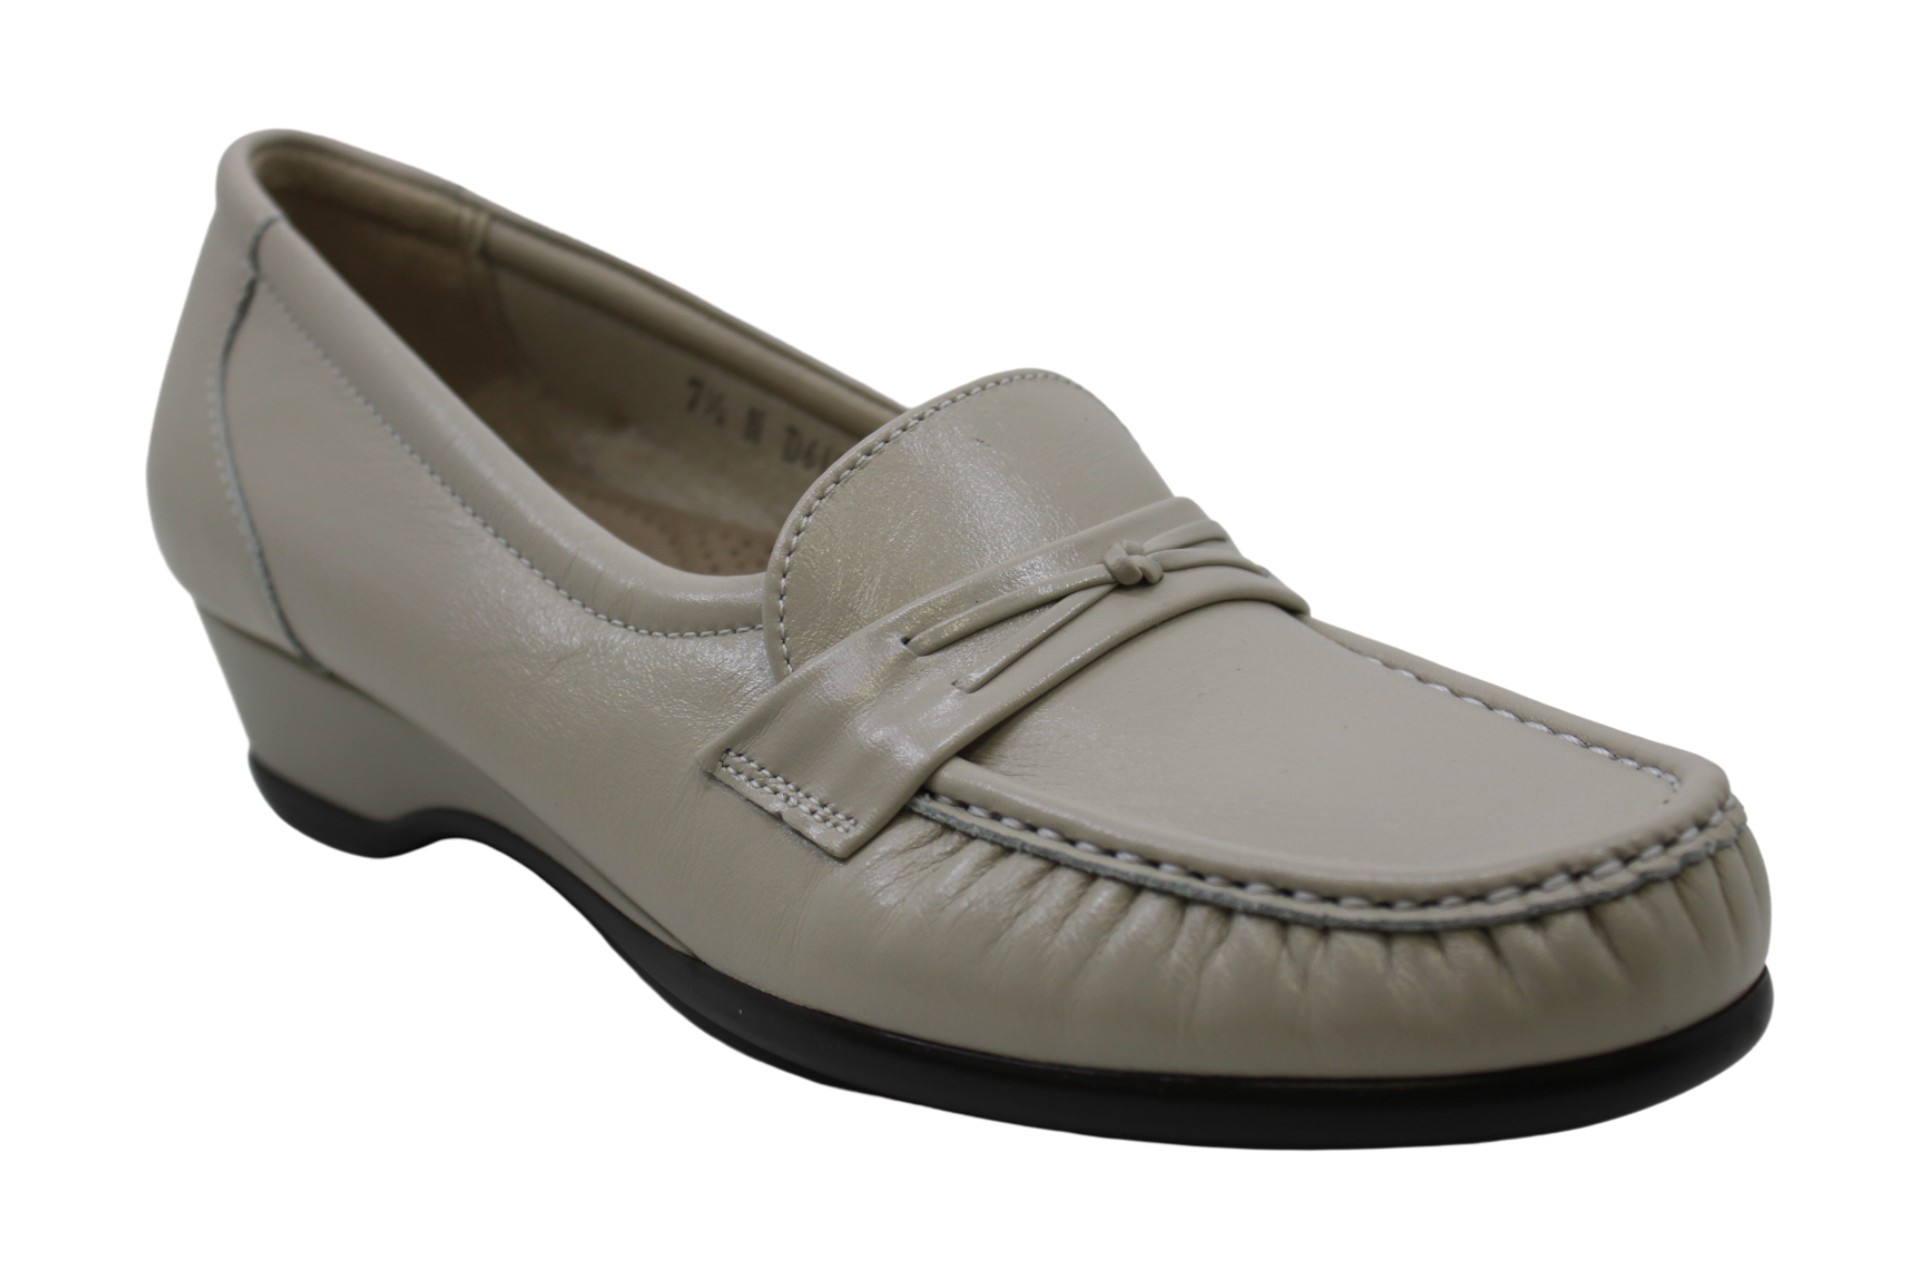 SAS Women's Shoes Easier Closed Toe Loafers, Bone, Size 9.5 | eBay